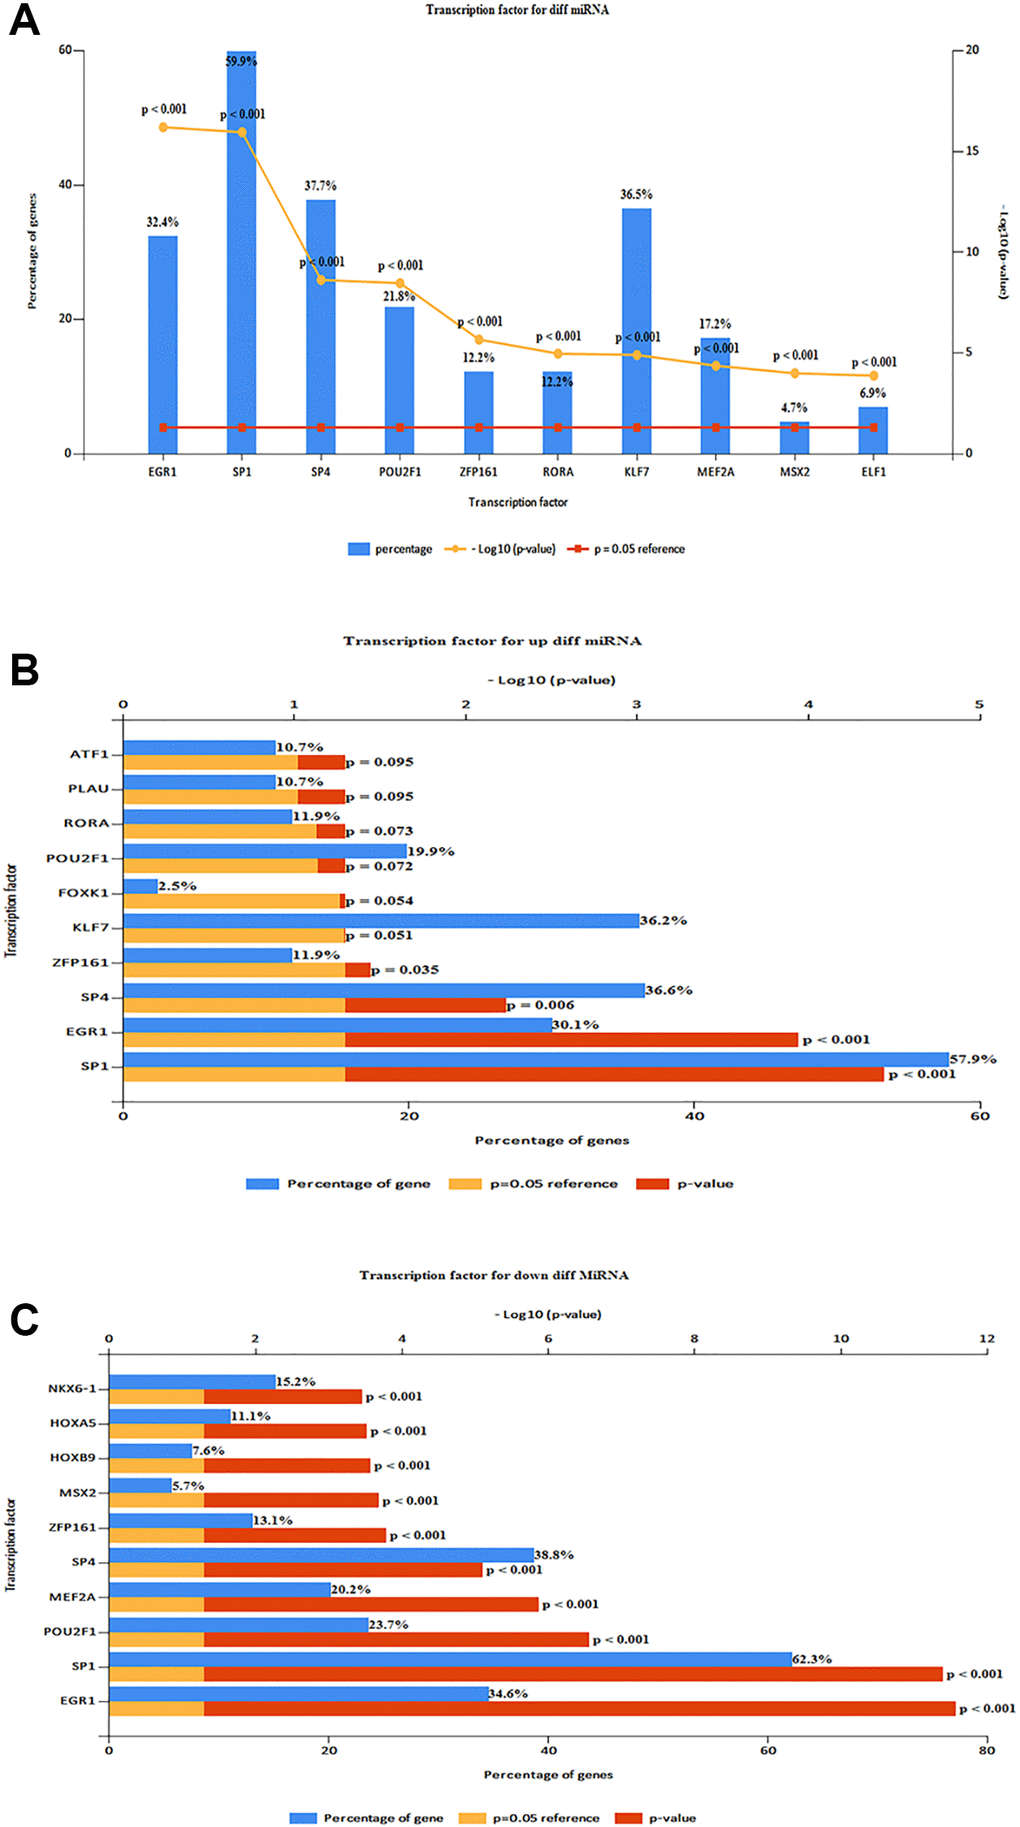 Predicting TF and target genes of miRNAs. (A) Top 10 TF of DE-miRNAs (SP1, SP4, KLF7EGR1, HNF4A, POU2F1, GABPA, ETS1, CTCF, and RREB1). (B) Top 10 TF of up-regulated DE-miRNAs (SP1, SP4, KLF7, EGR1, HNF4A, CTCF, POU2F1, NFYA, GABPA, and RREB1). (C) Top 10 TF of down-regulated DE-miRNAs (SP1, SP4, KLF7, EGR1, HNF4A, POU2F1, GABPA, ETS1, MEF2A, and NFIC).